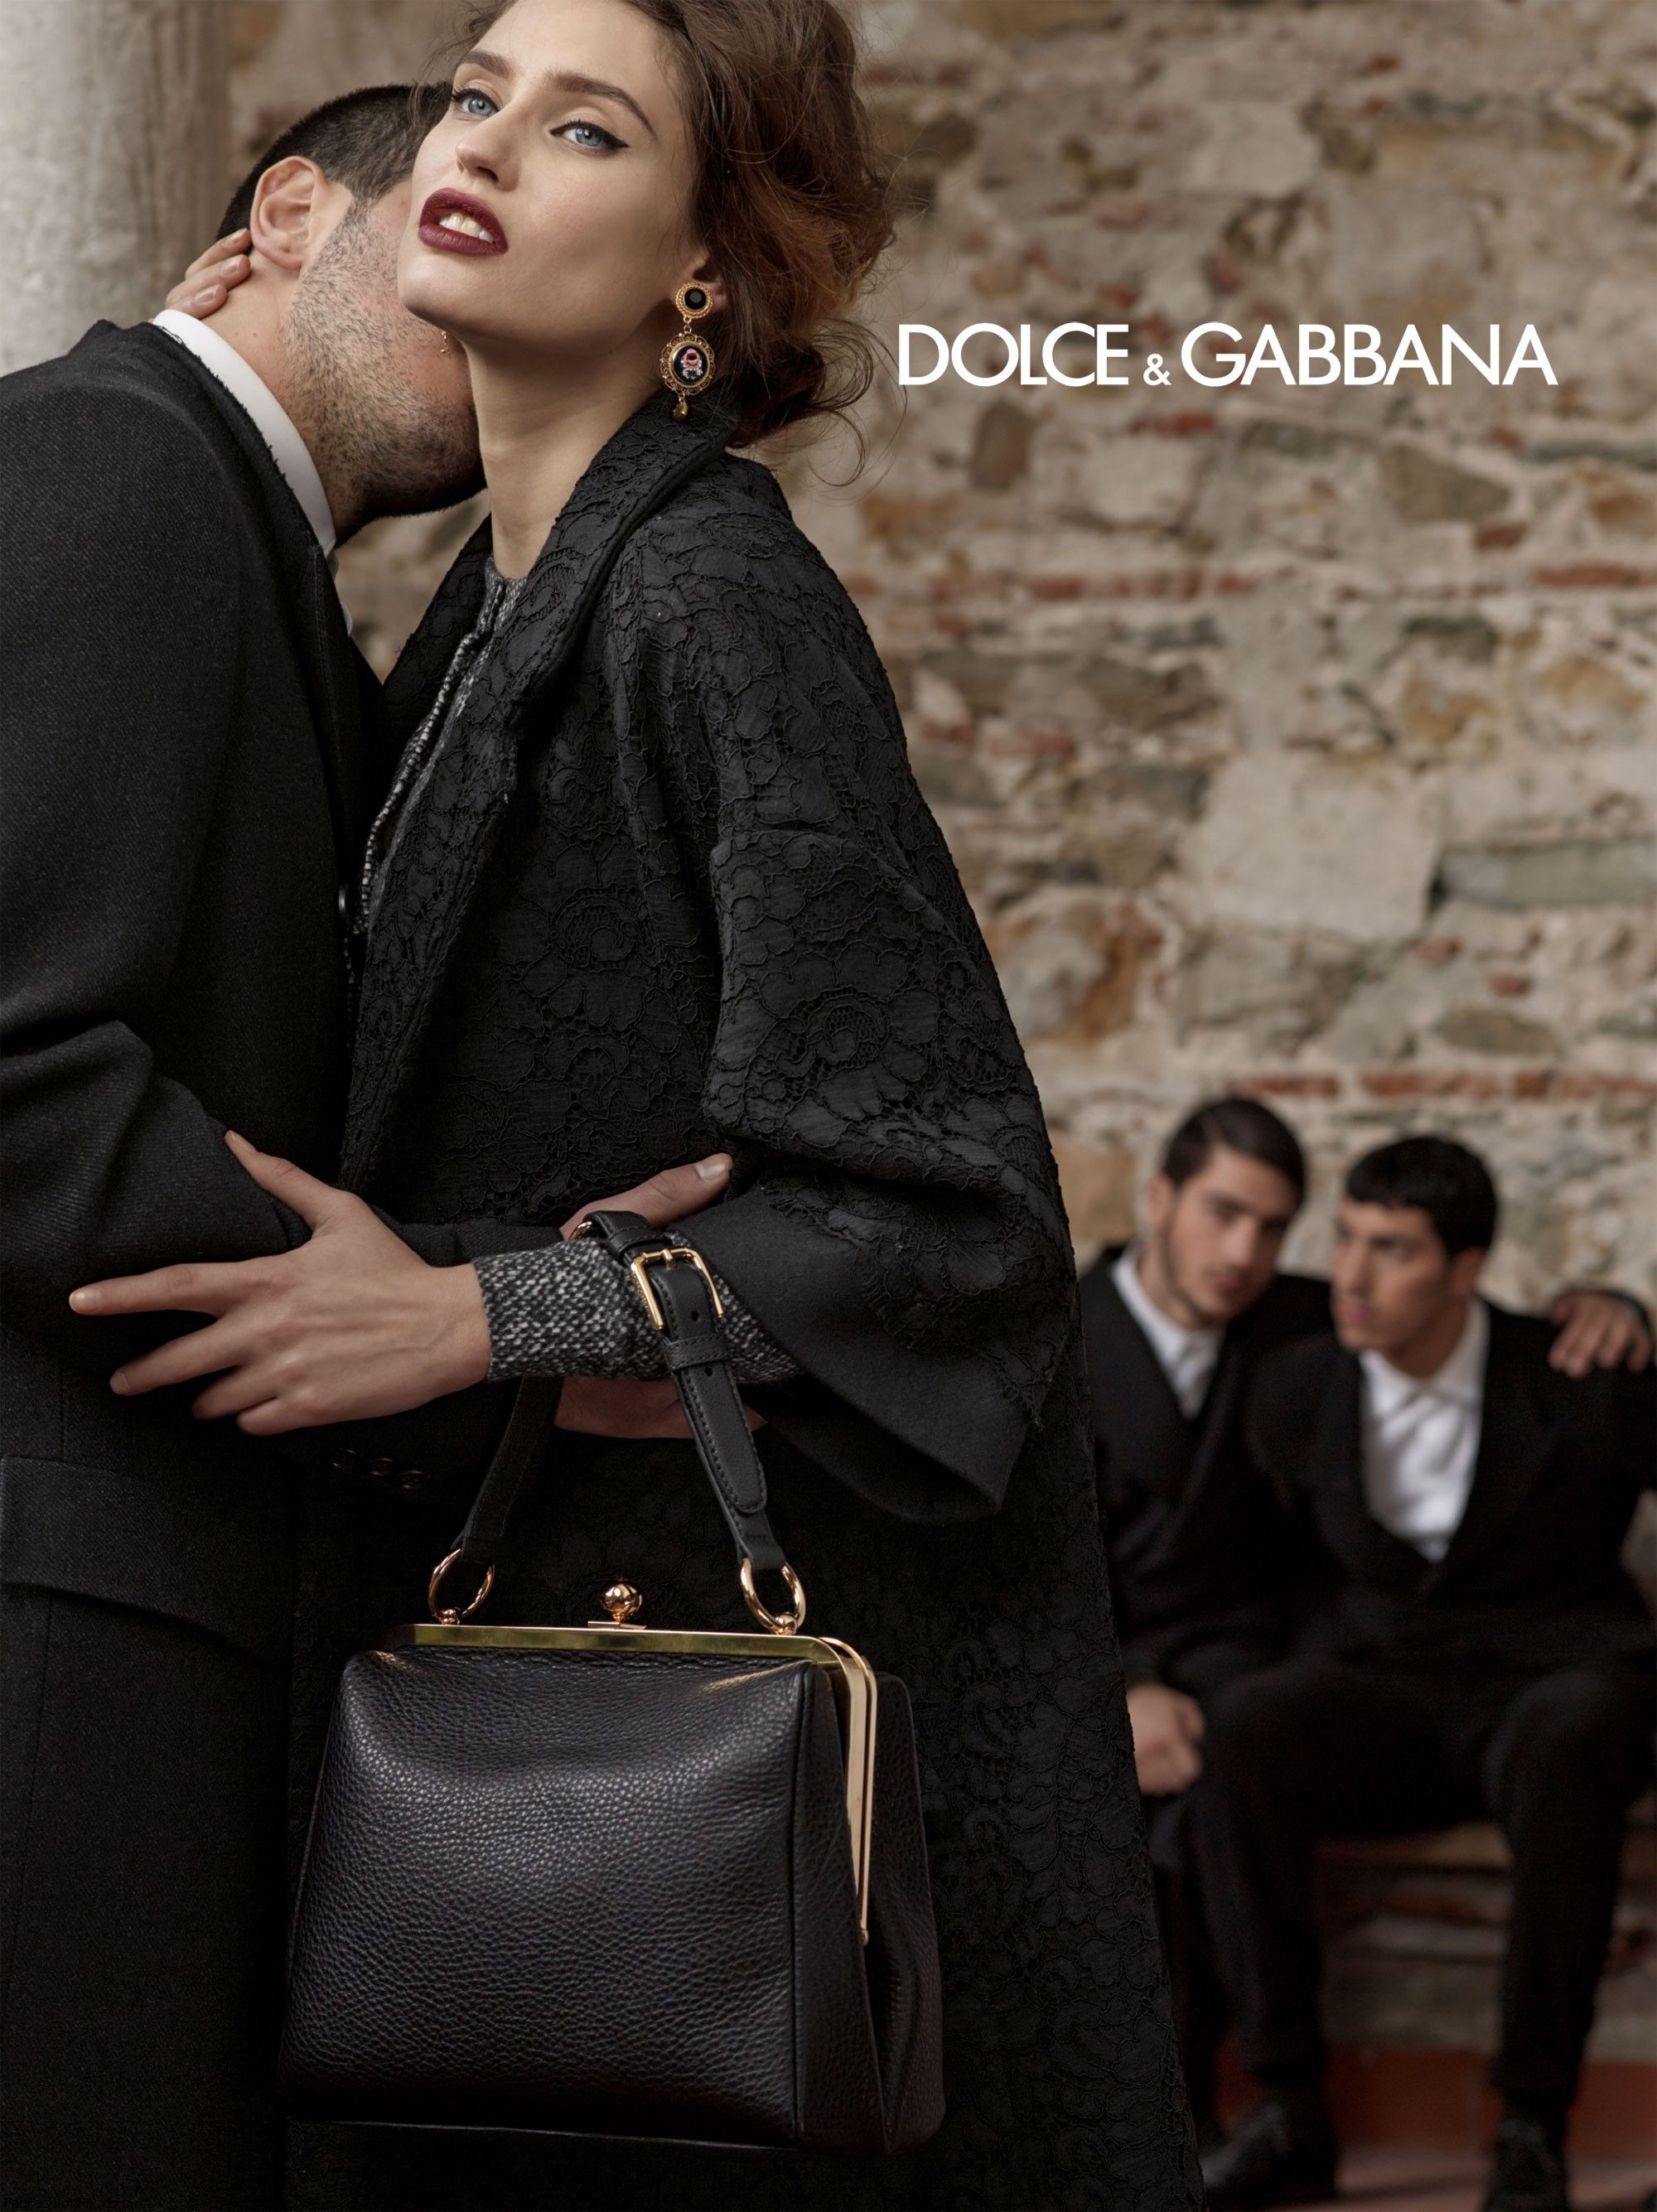 Фирма dolce. Сицилийская вдова Dolce Gabbana Бьянка Балти. Dolce Gabbana 2021 Бьянка Балти.